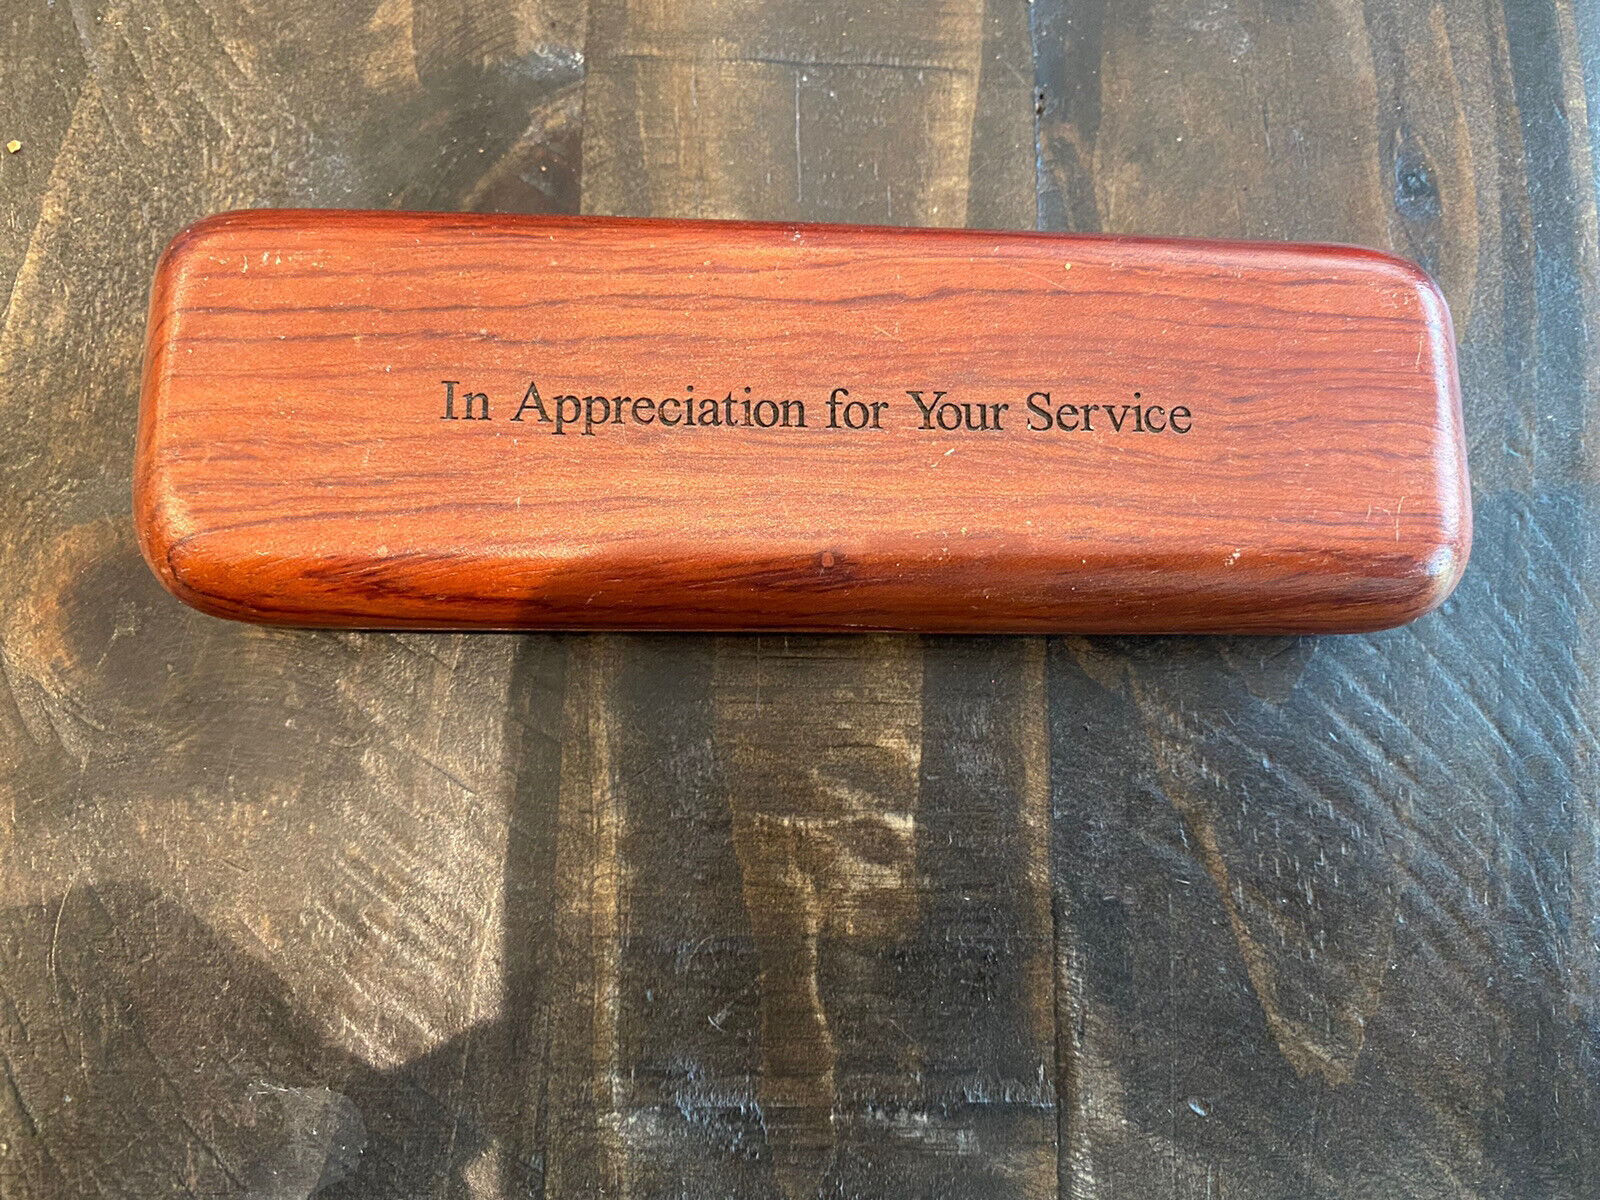 Missouri National Guard Decorative Pen Set - In Appreciation For Your Service